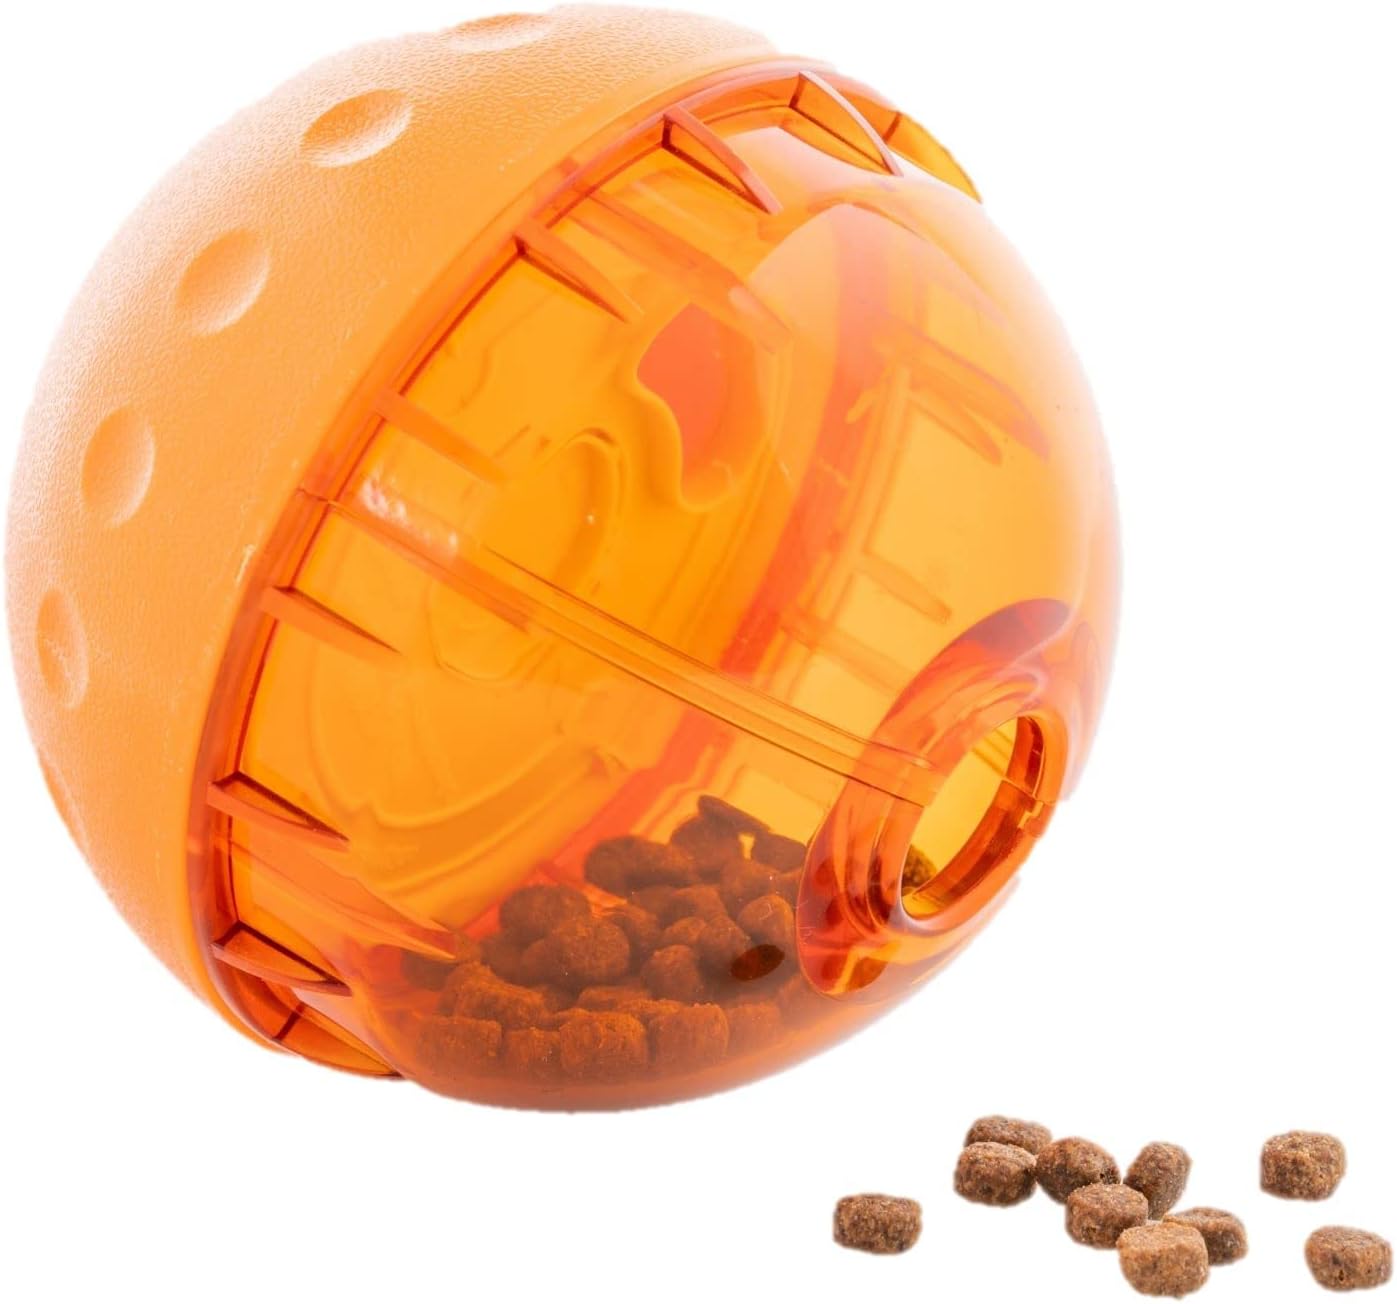 9. OnzePets IQ Treat Ball Interactieve Food Dispensing Toy